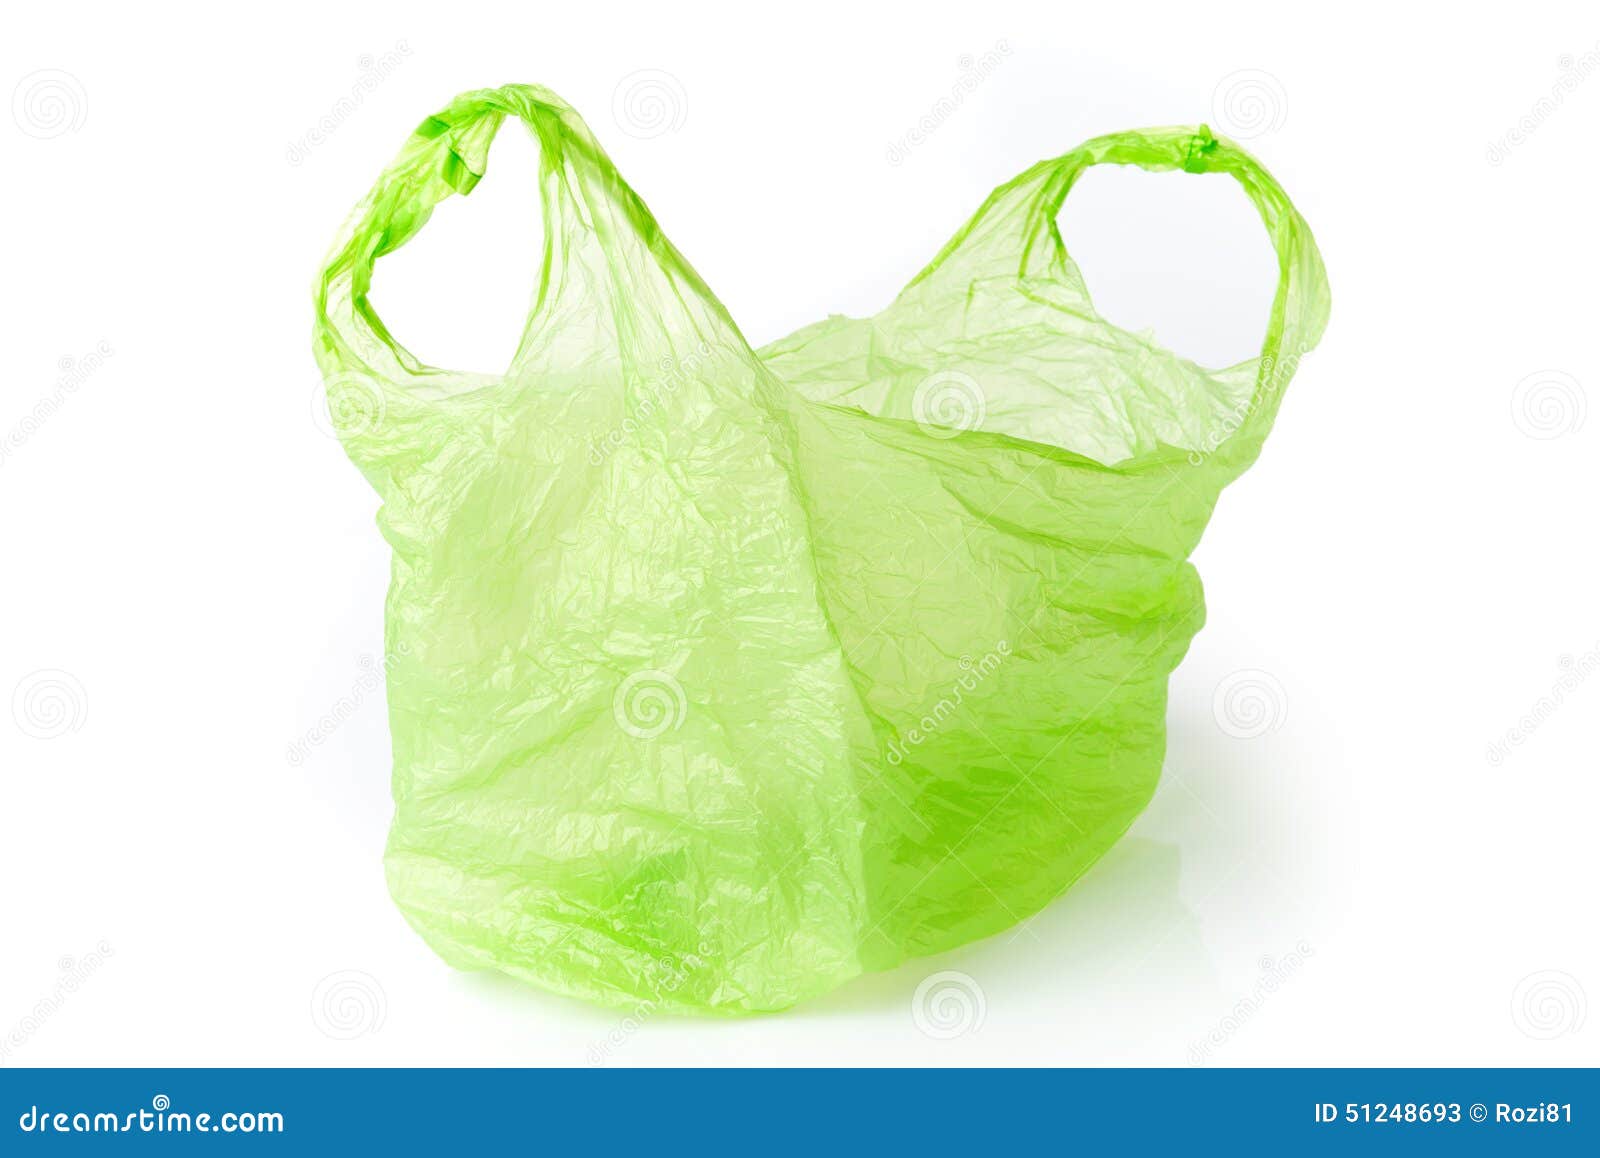 Green plastic bag isolated stock image. Image of enviromental - 51248693